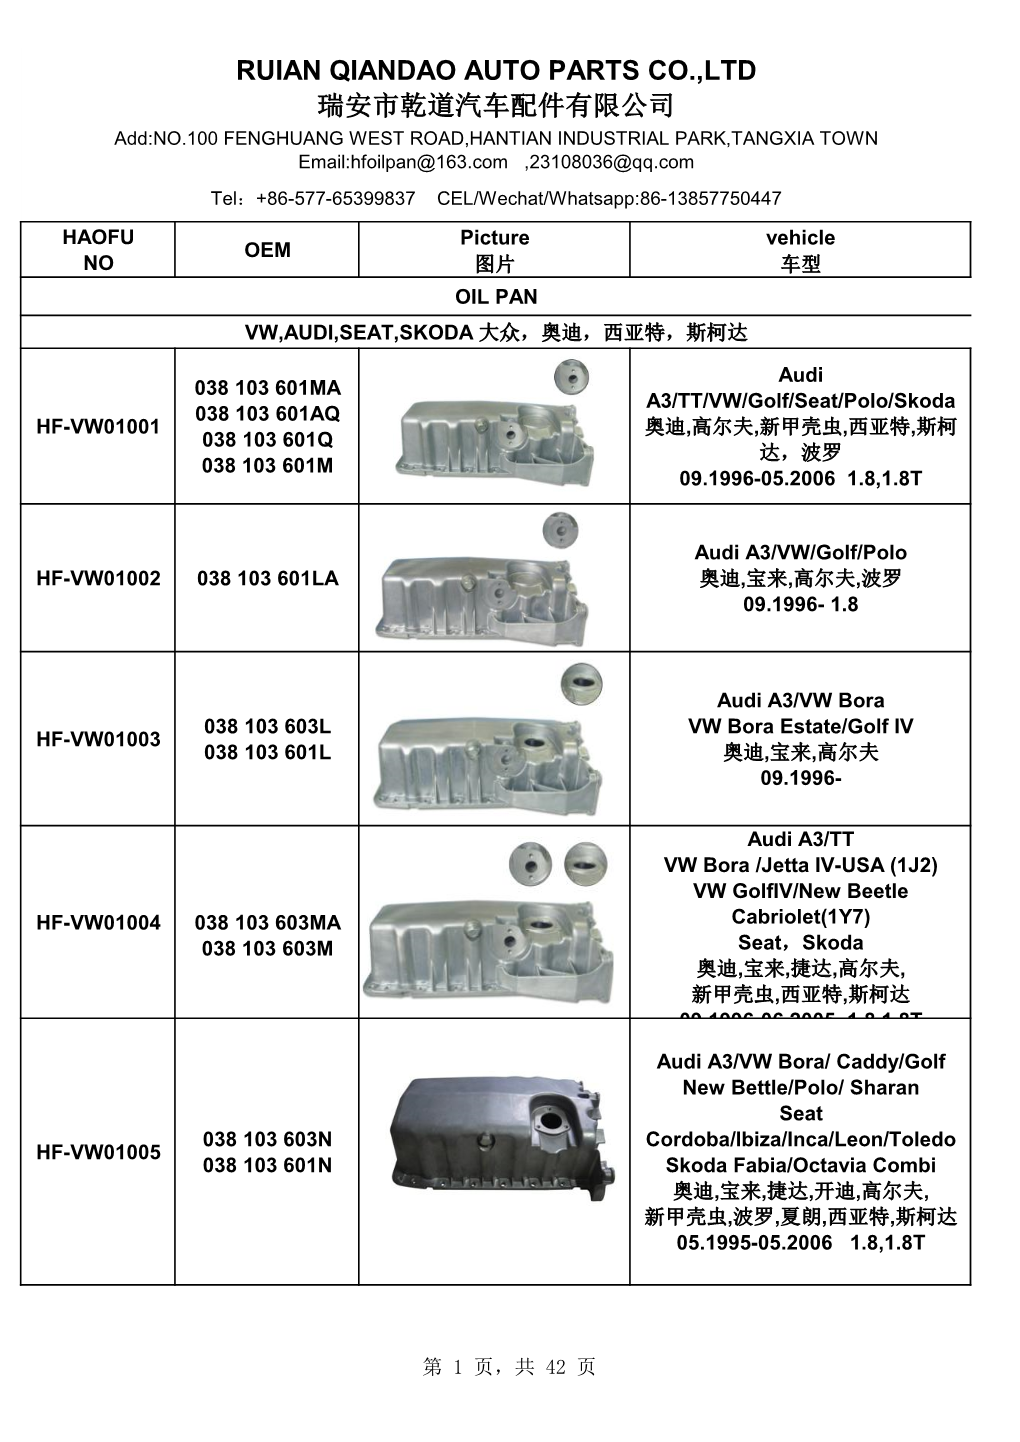 Ruian Qiandao Auto Parts Co.,Ltd 瑞安市乾道汽车配件有限公司